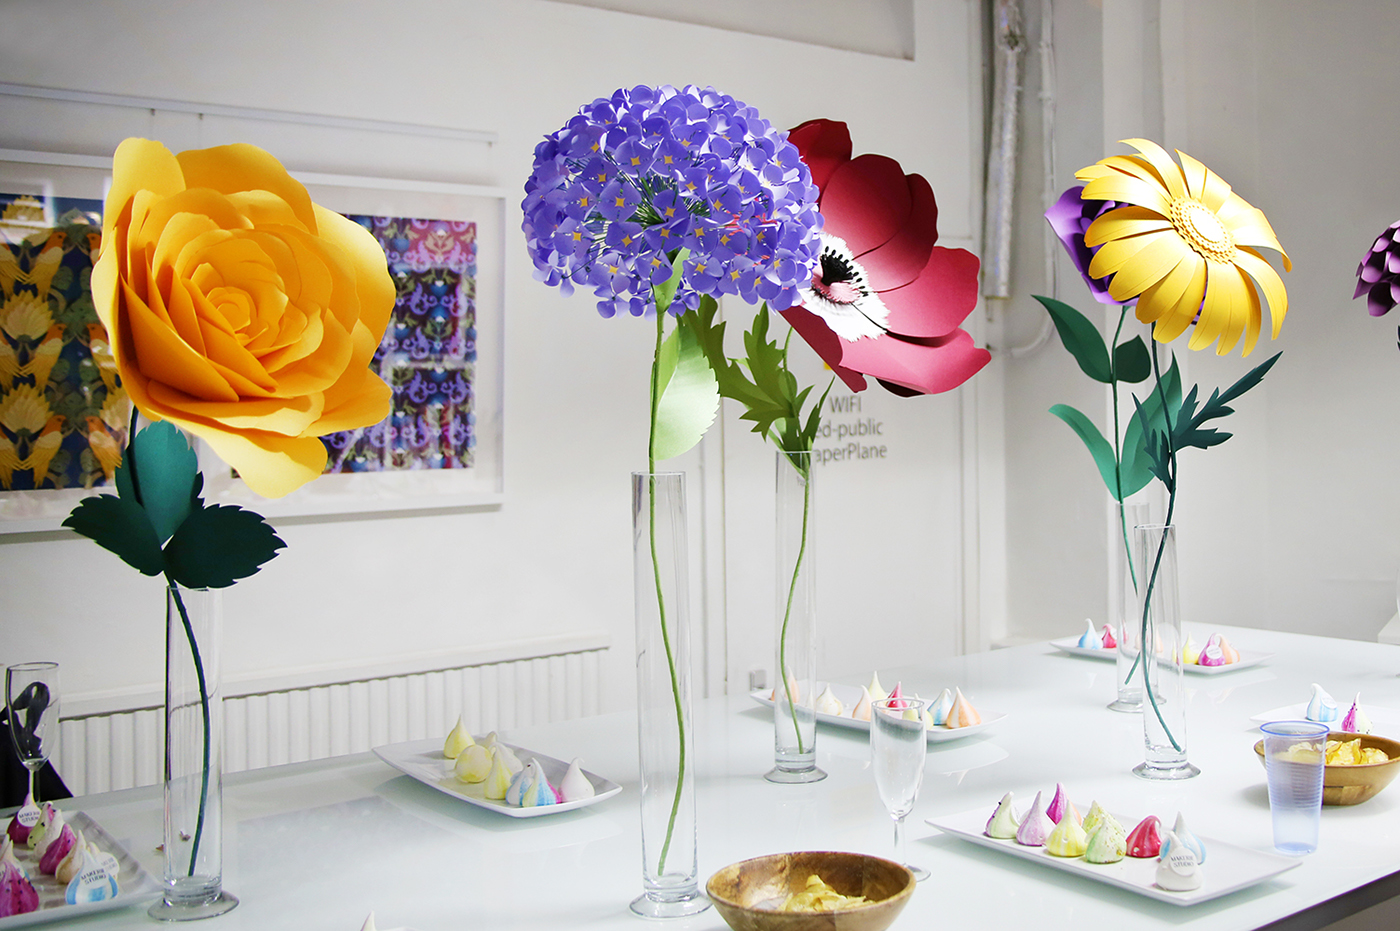 paper sculpture paperart pattern Flowers Flora fauna Exhibition  Show art